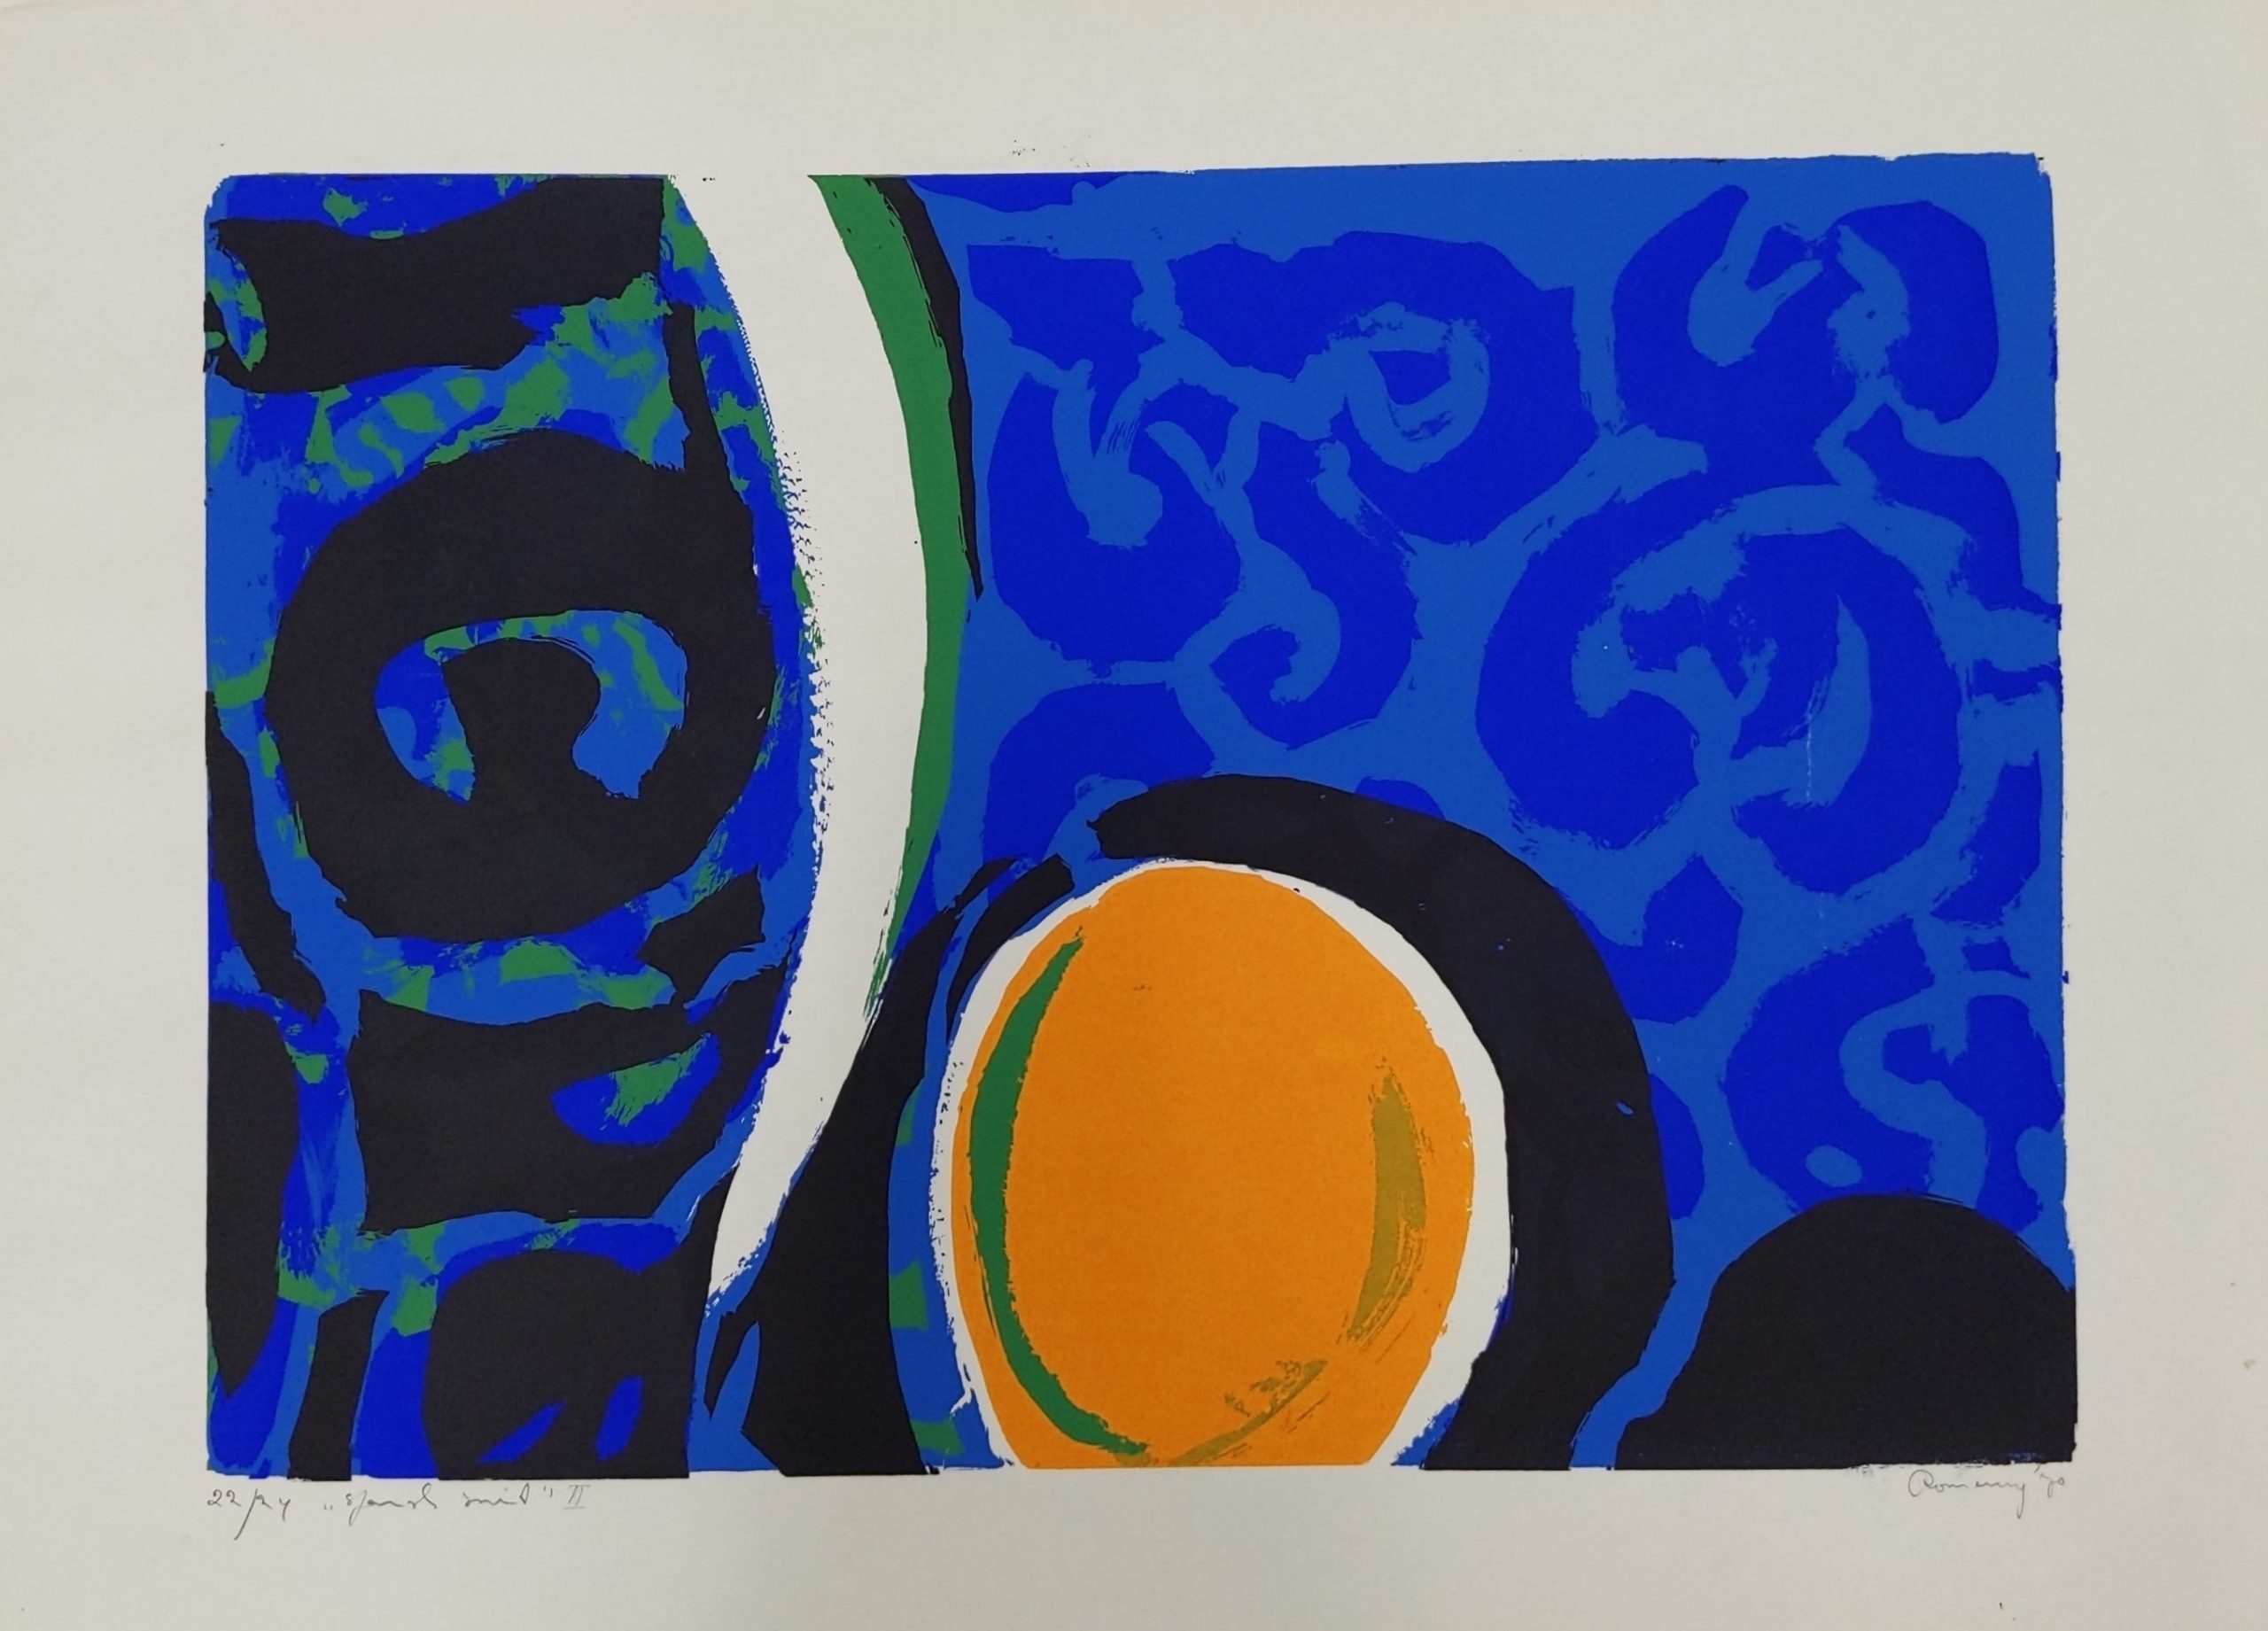 "Soleil nuit",  1970, screentryck, 45 x 61 cm. Ed. 24. 3 200 kr (320 €)